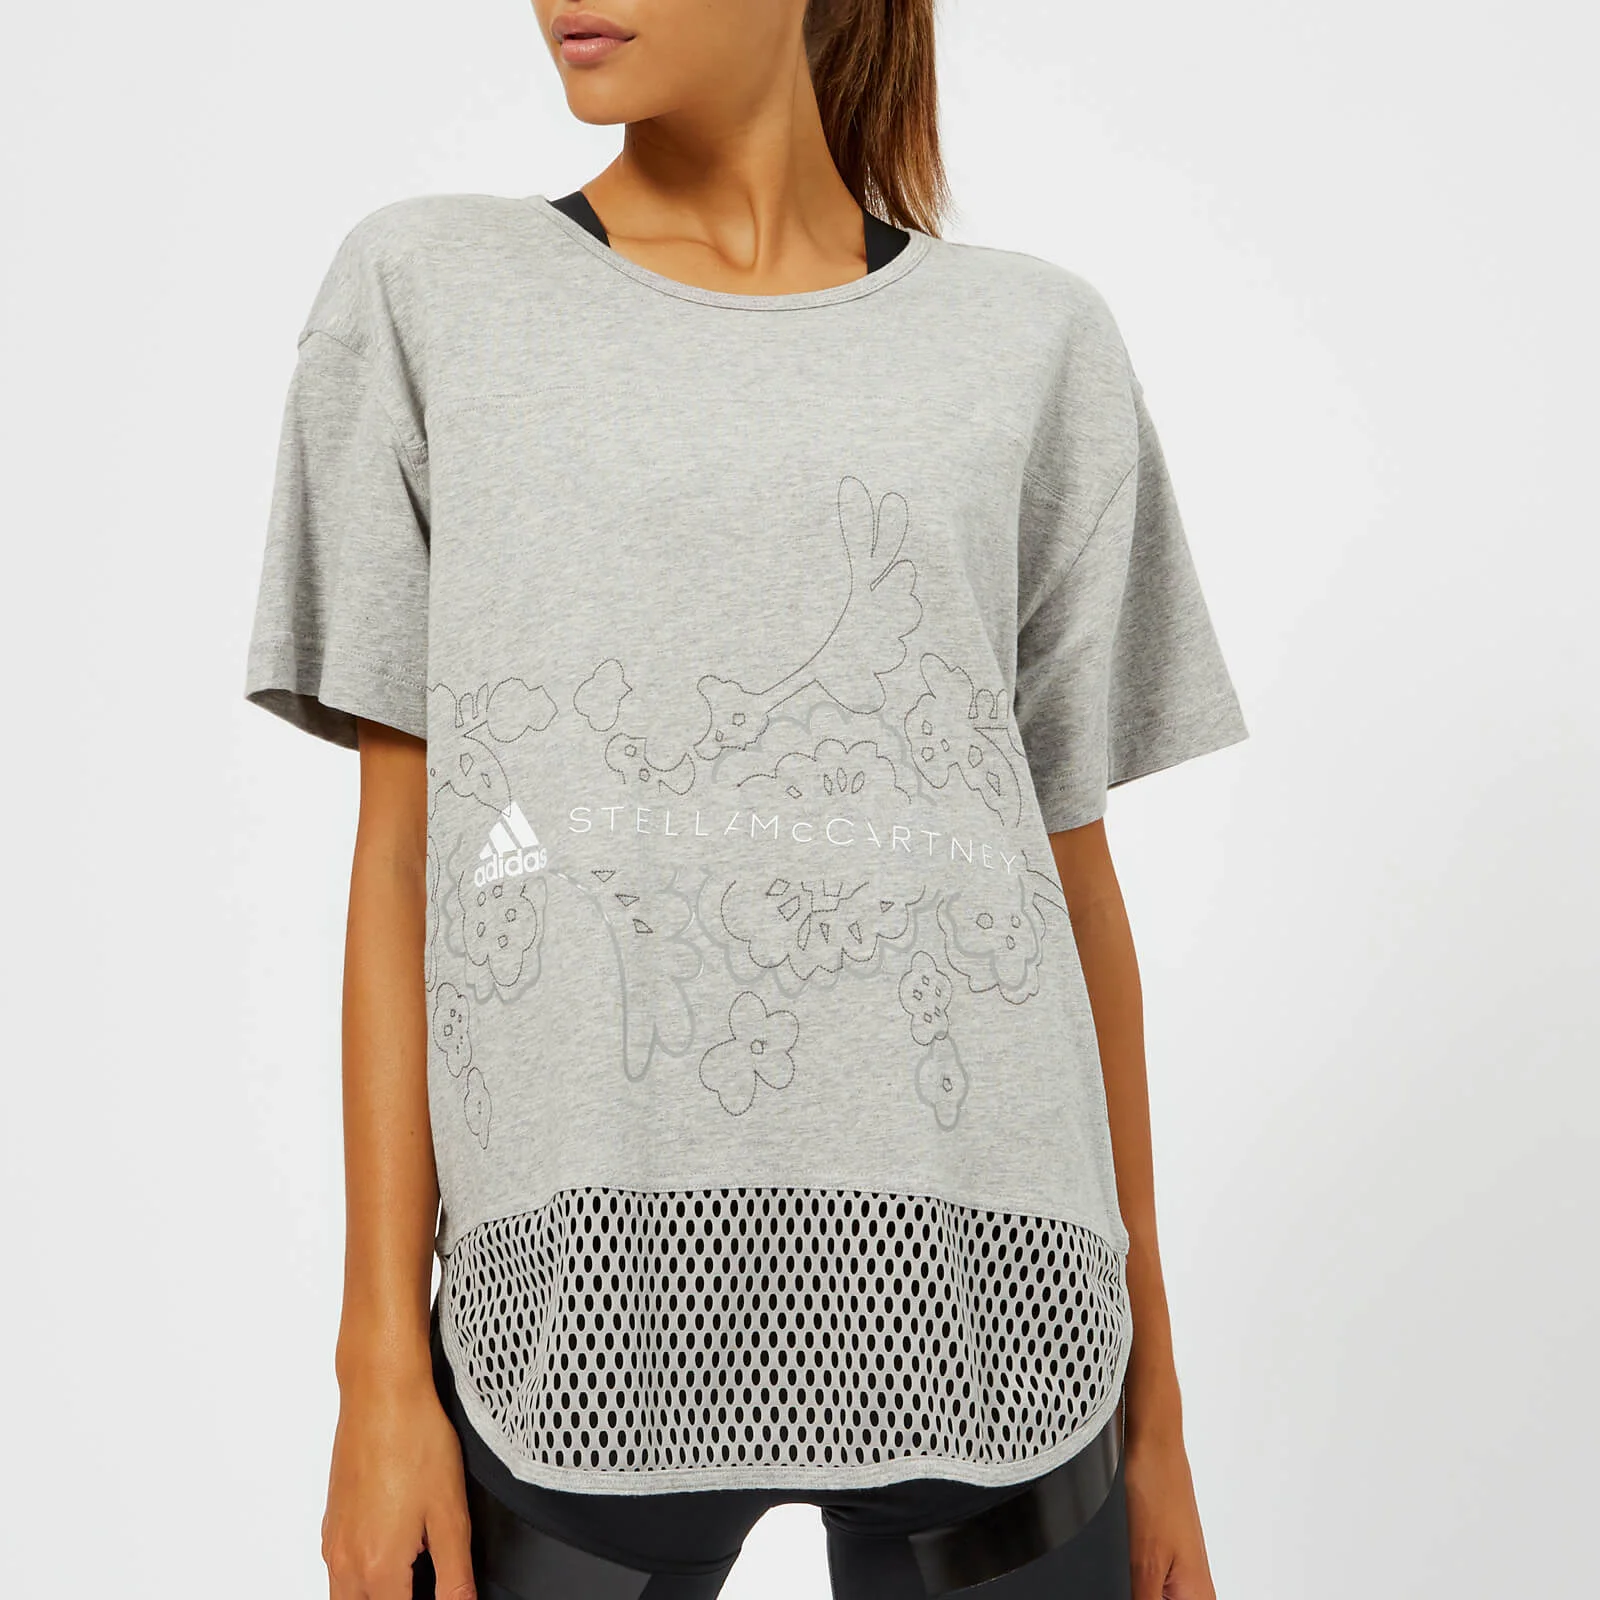 adidas by Stella McCartney Women's Essential Graphic Short Sleeve T-Shirt - Medium Grey Heather Image 1